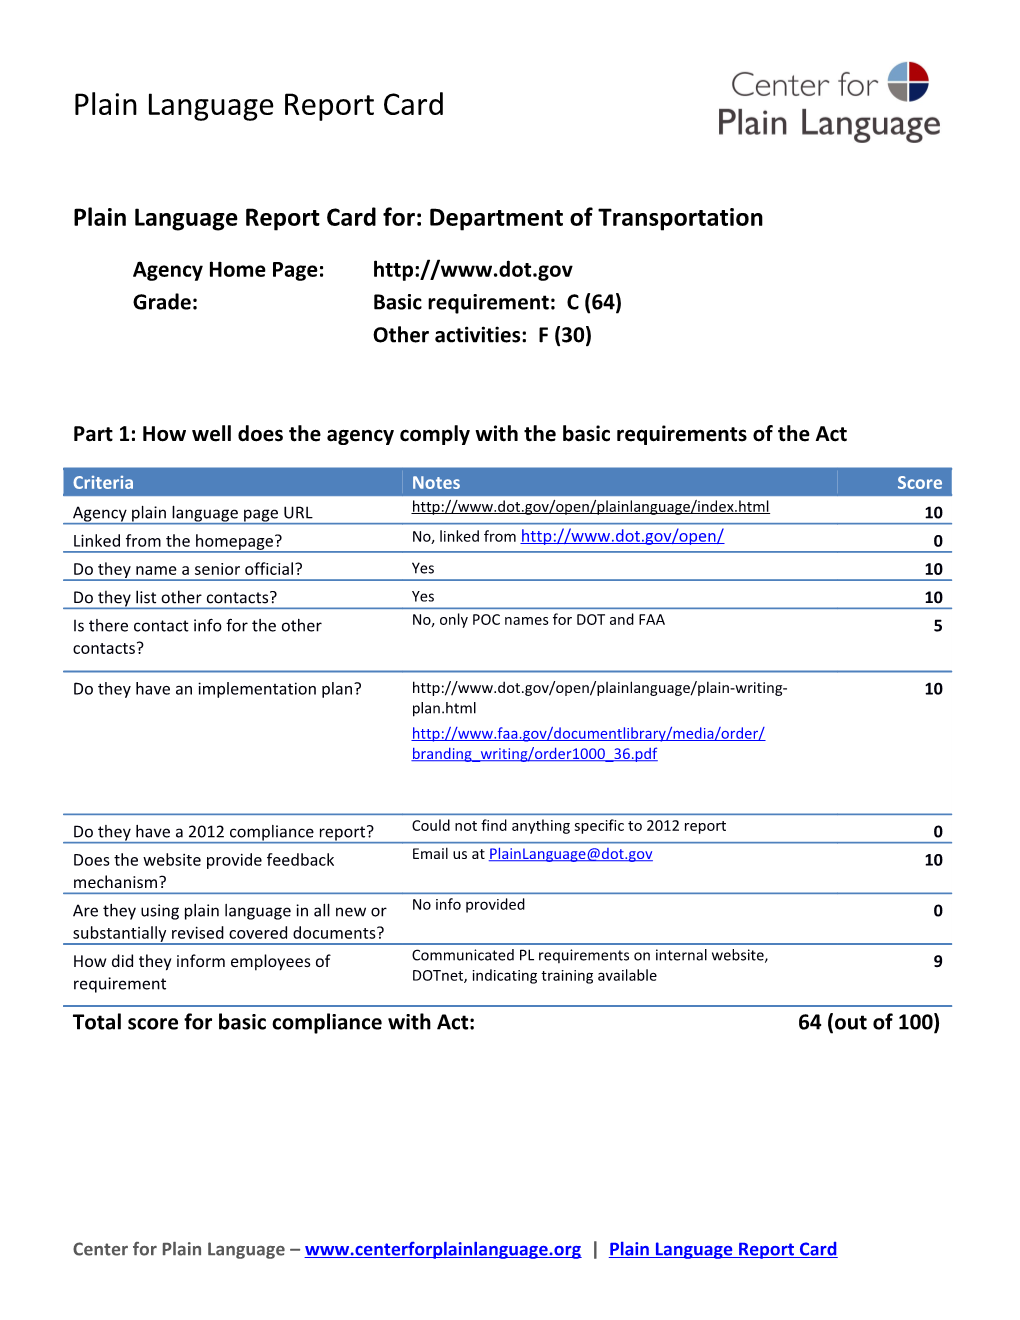 Plain Language Report Card For: Department of Transportation